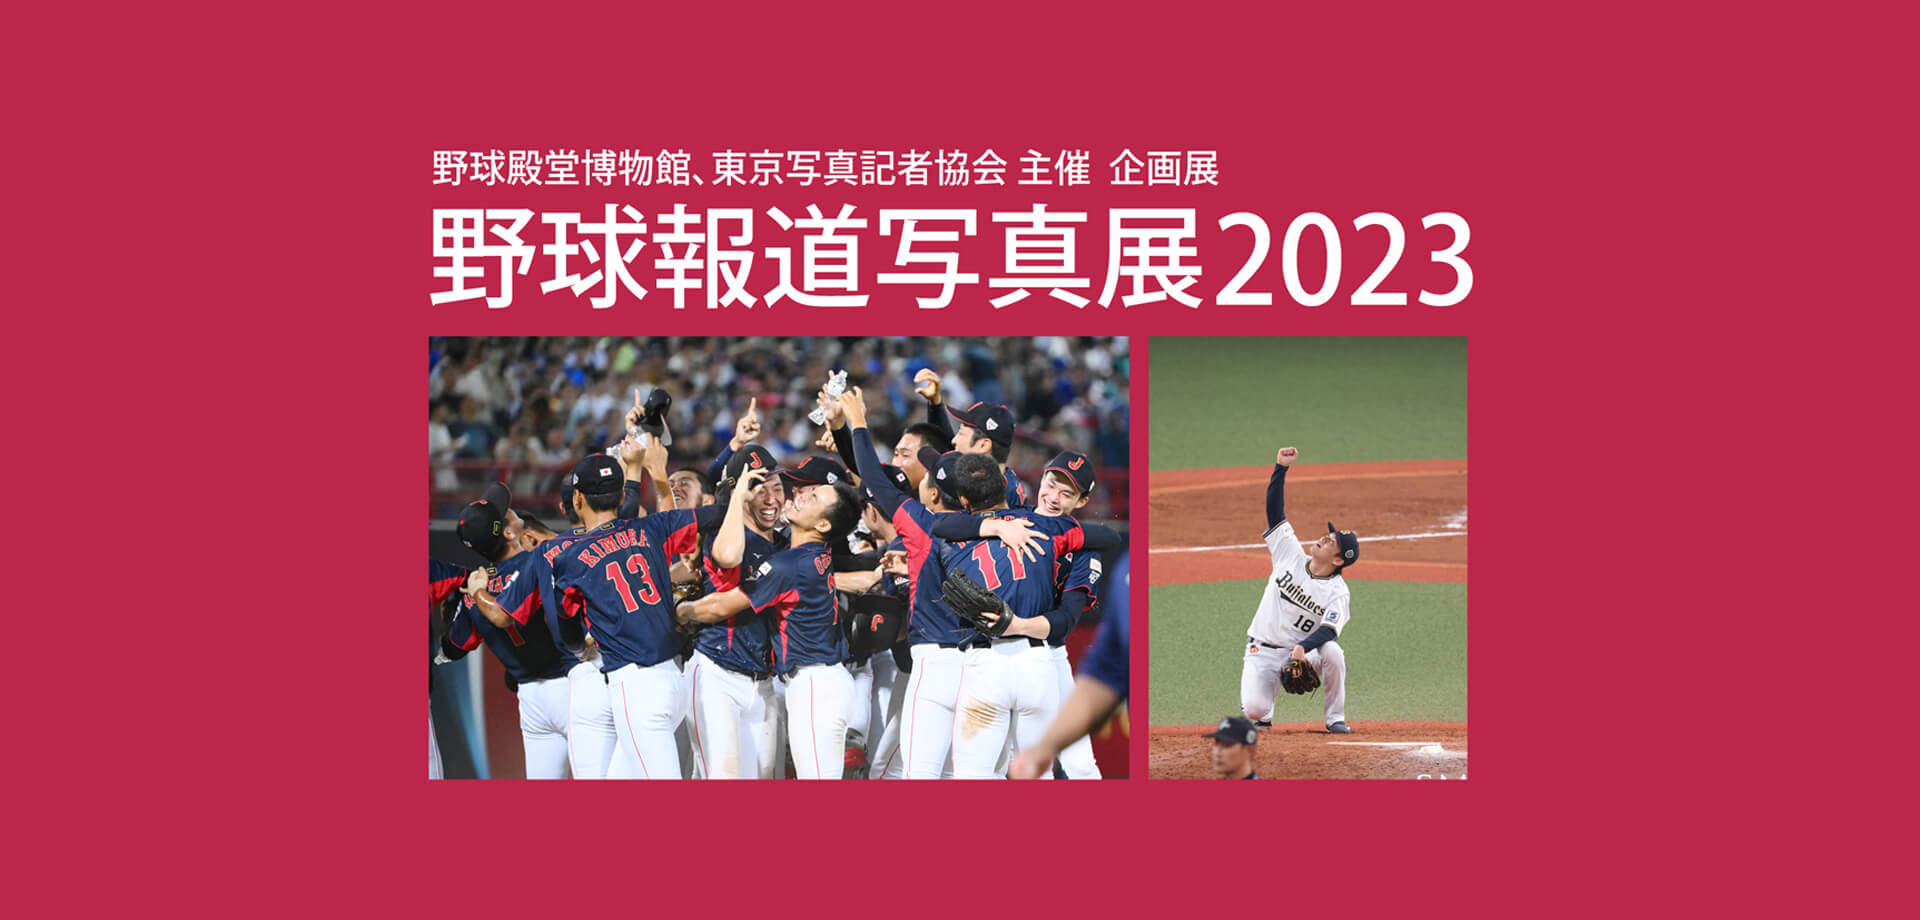 野球報道写真展2023バナー